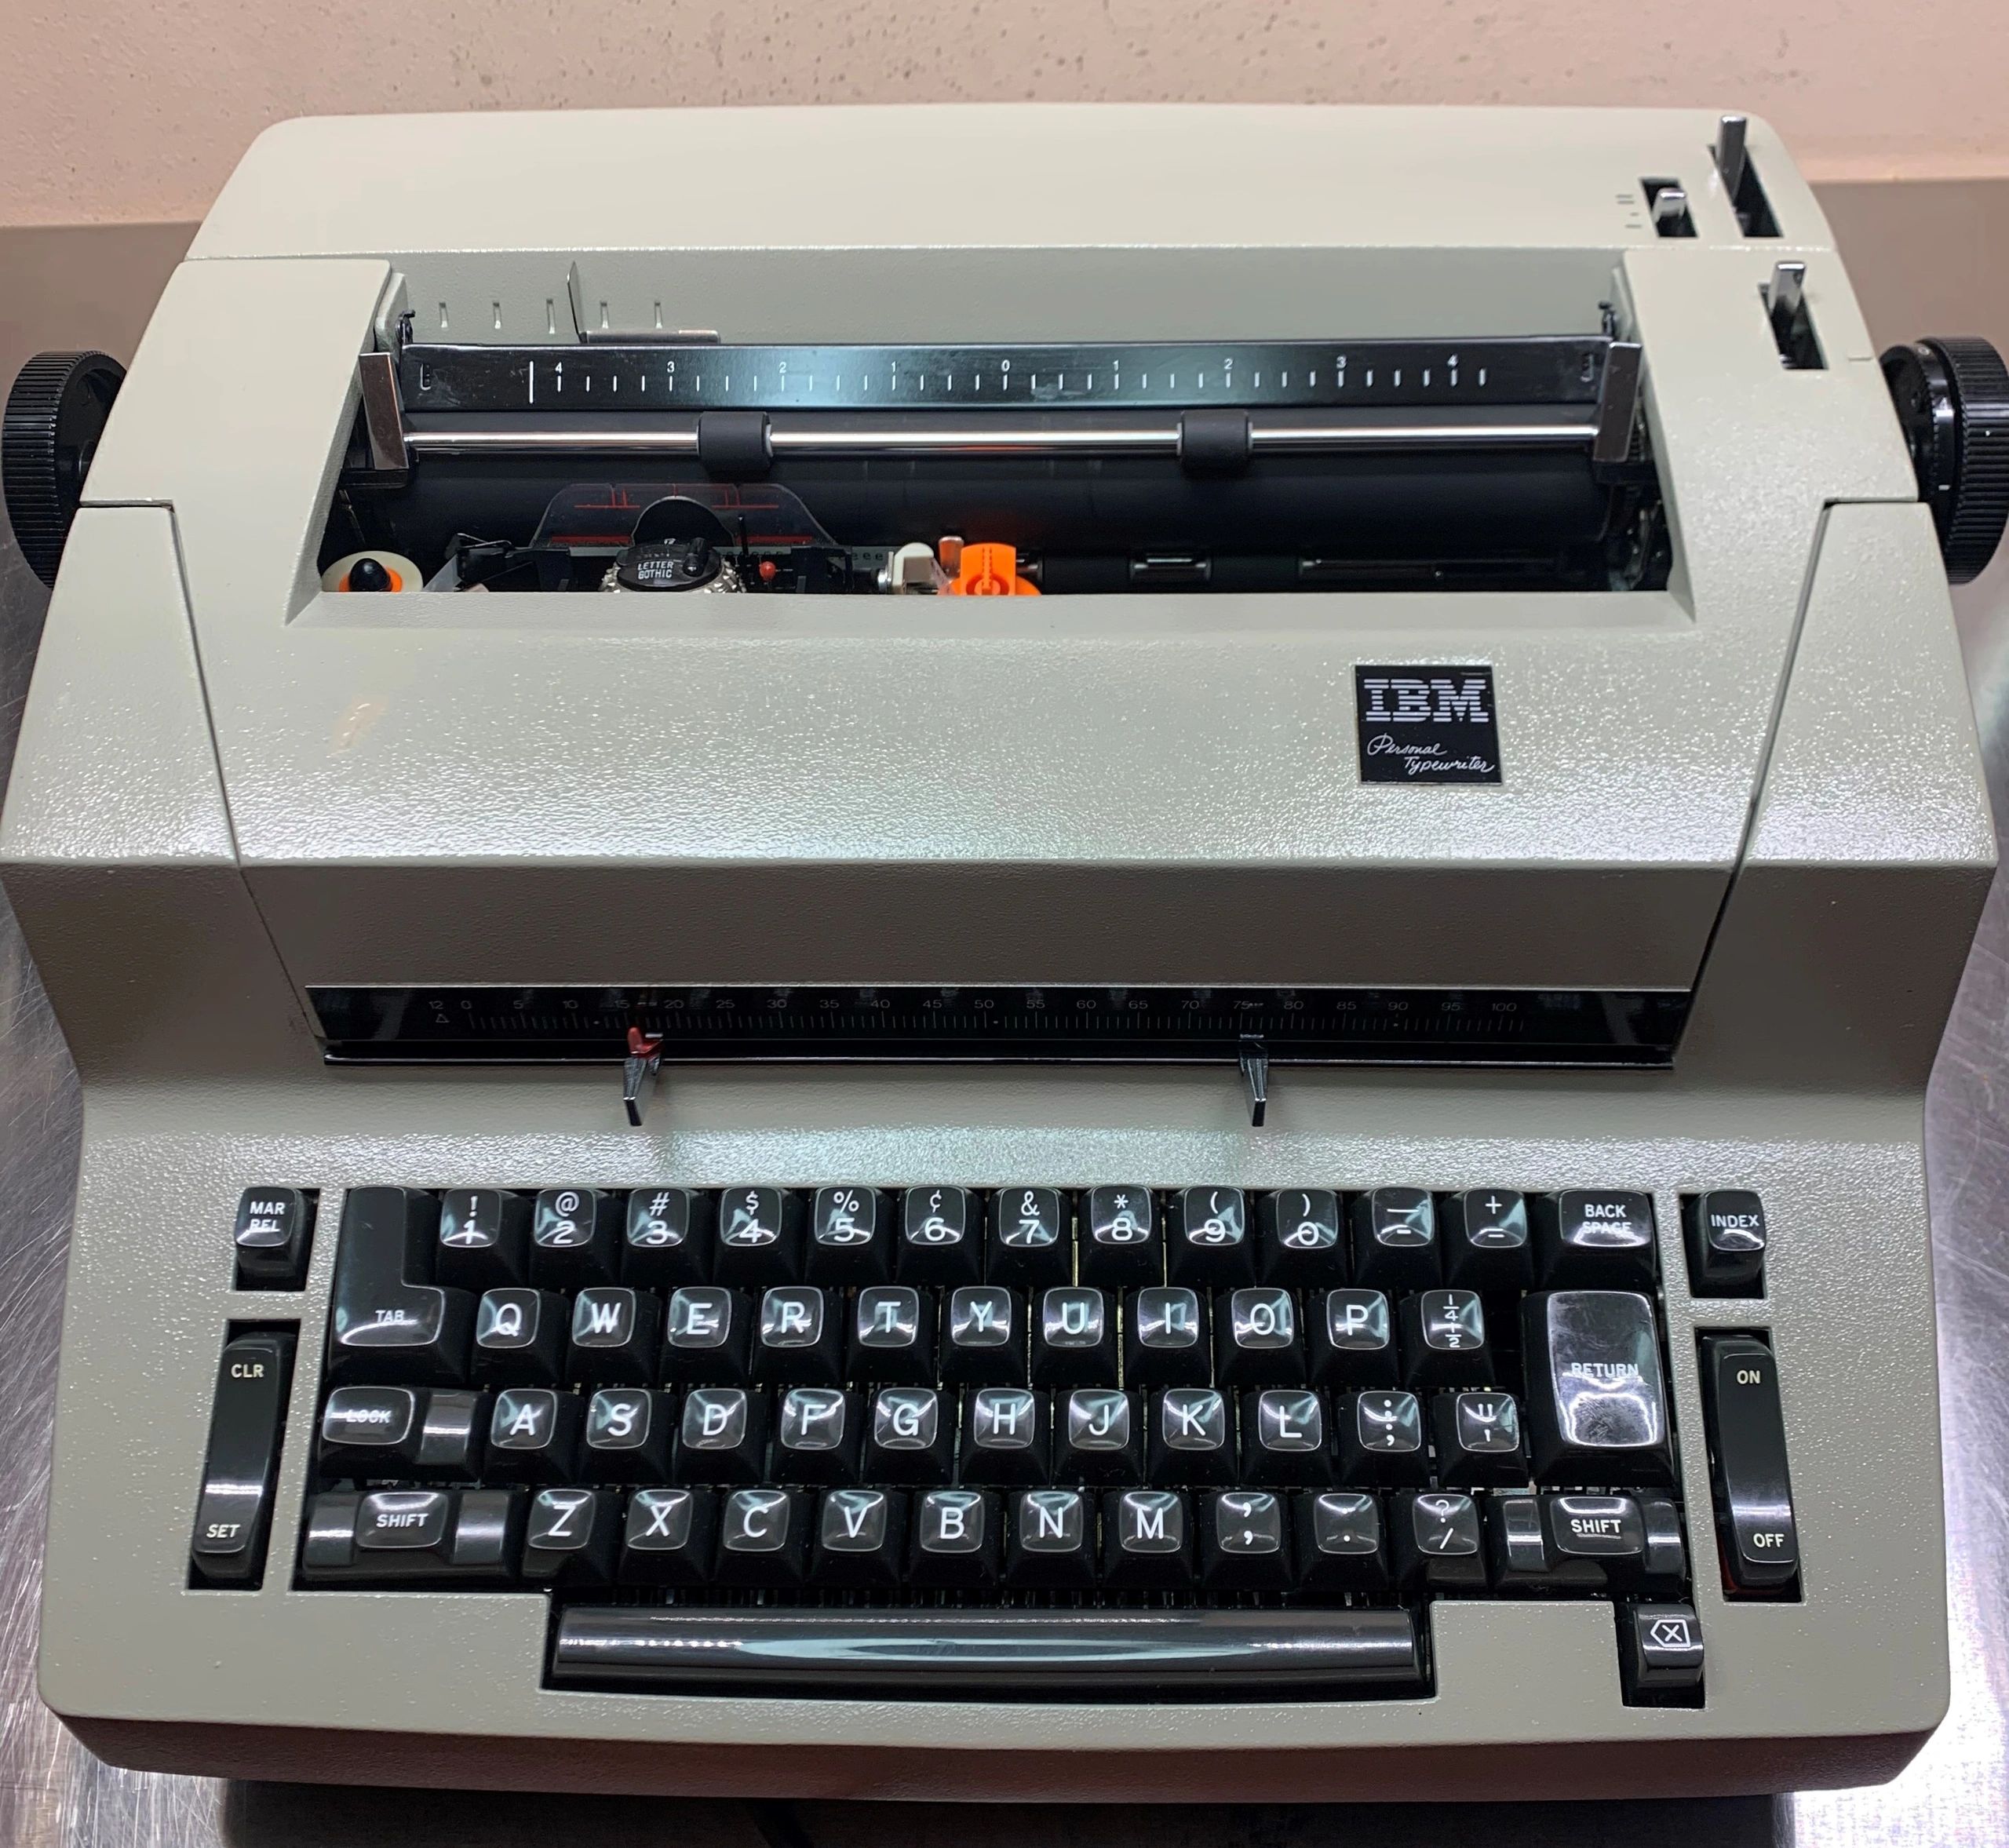 IBM Typewriter Sales and Service - Home